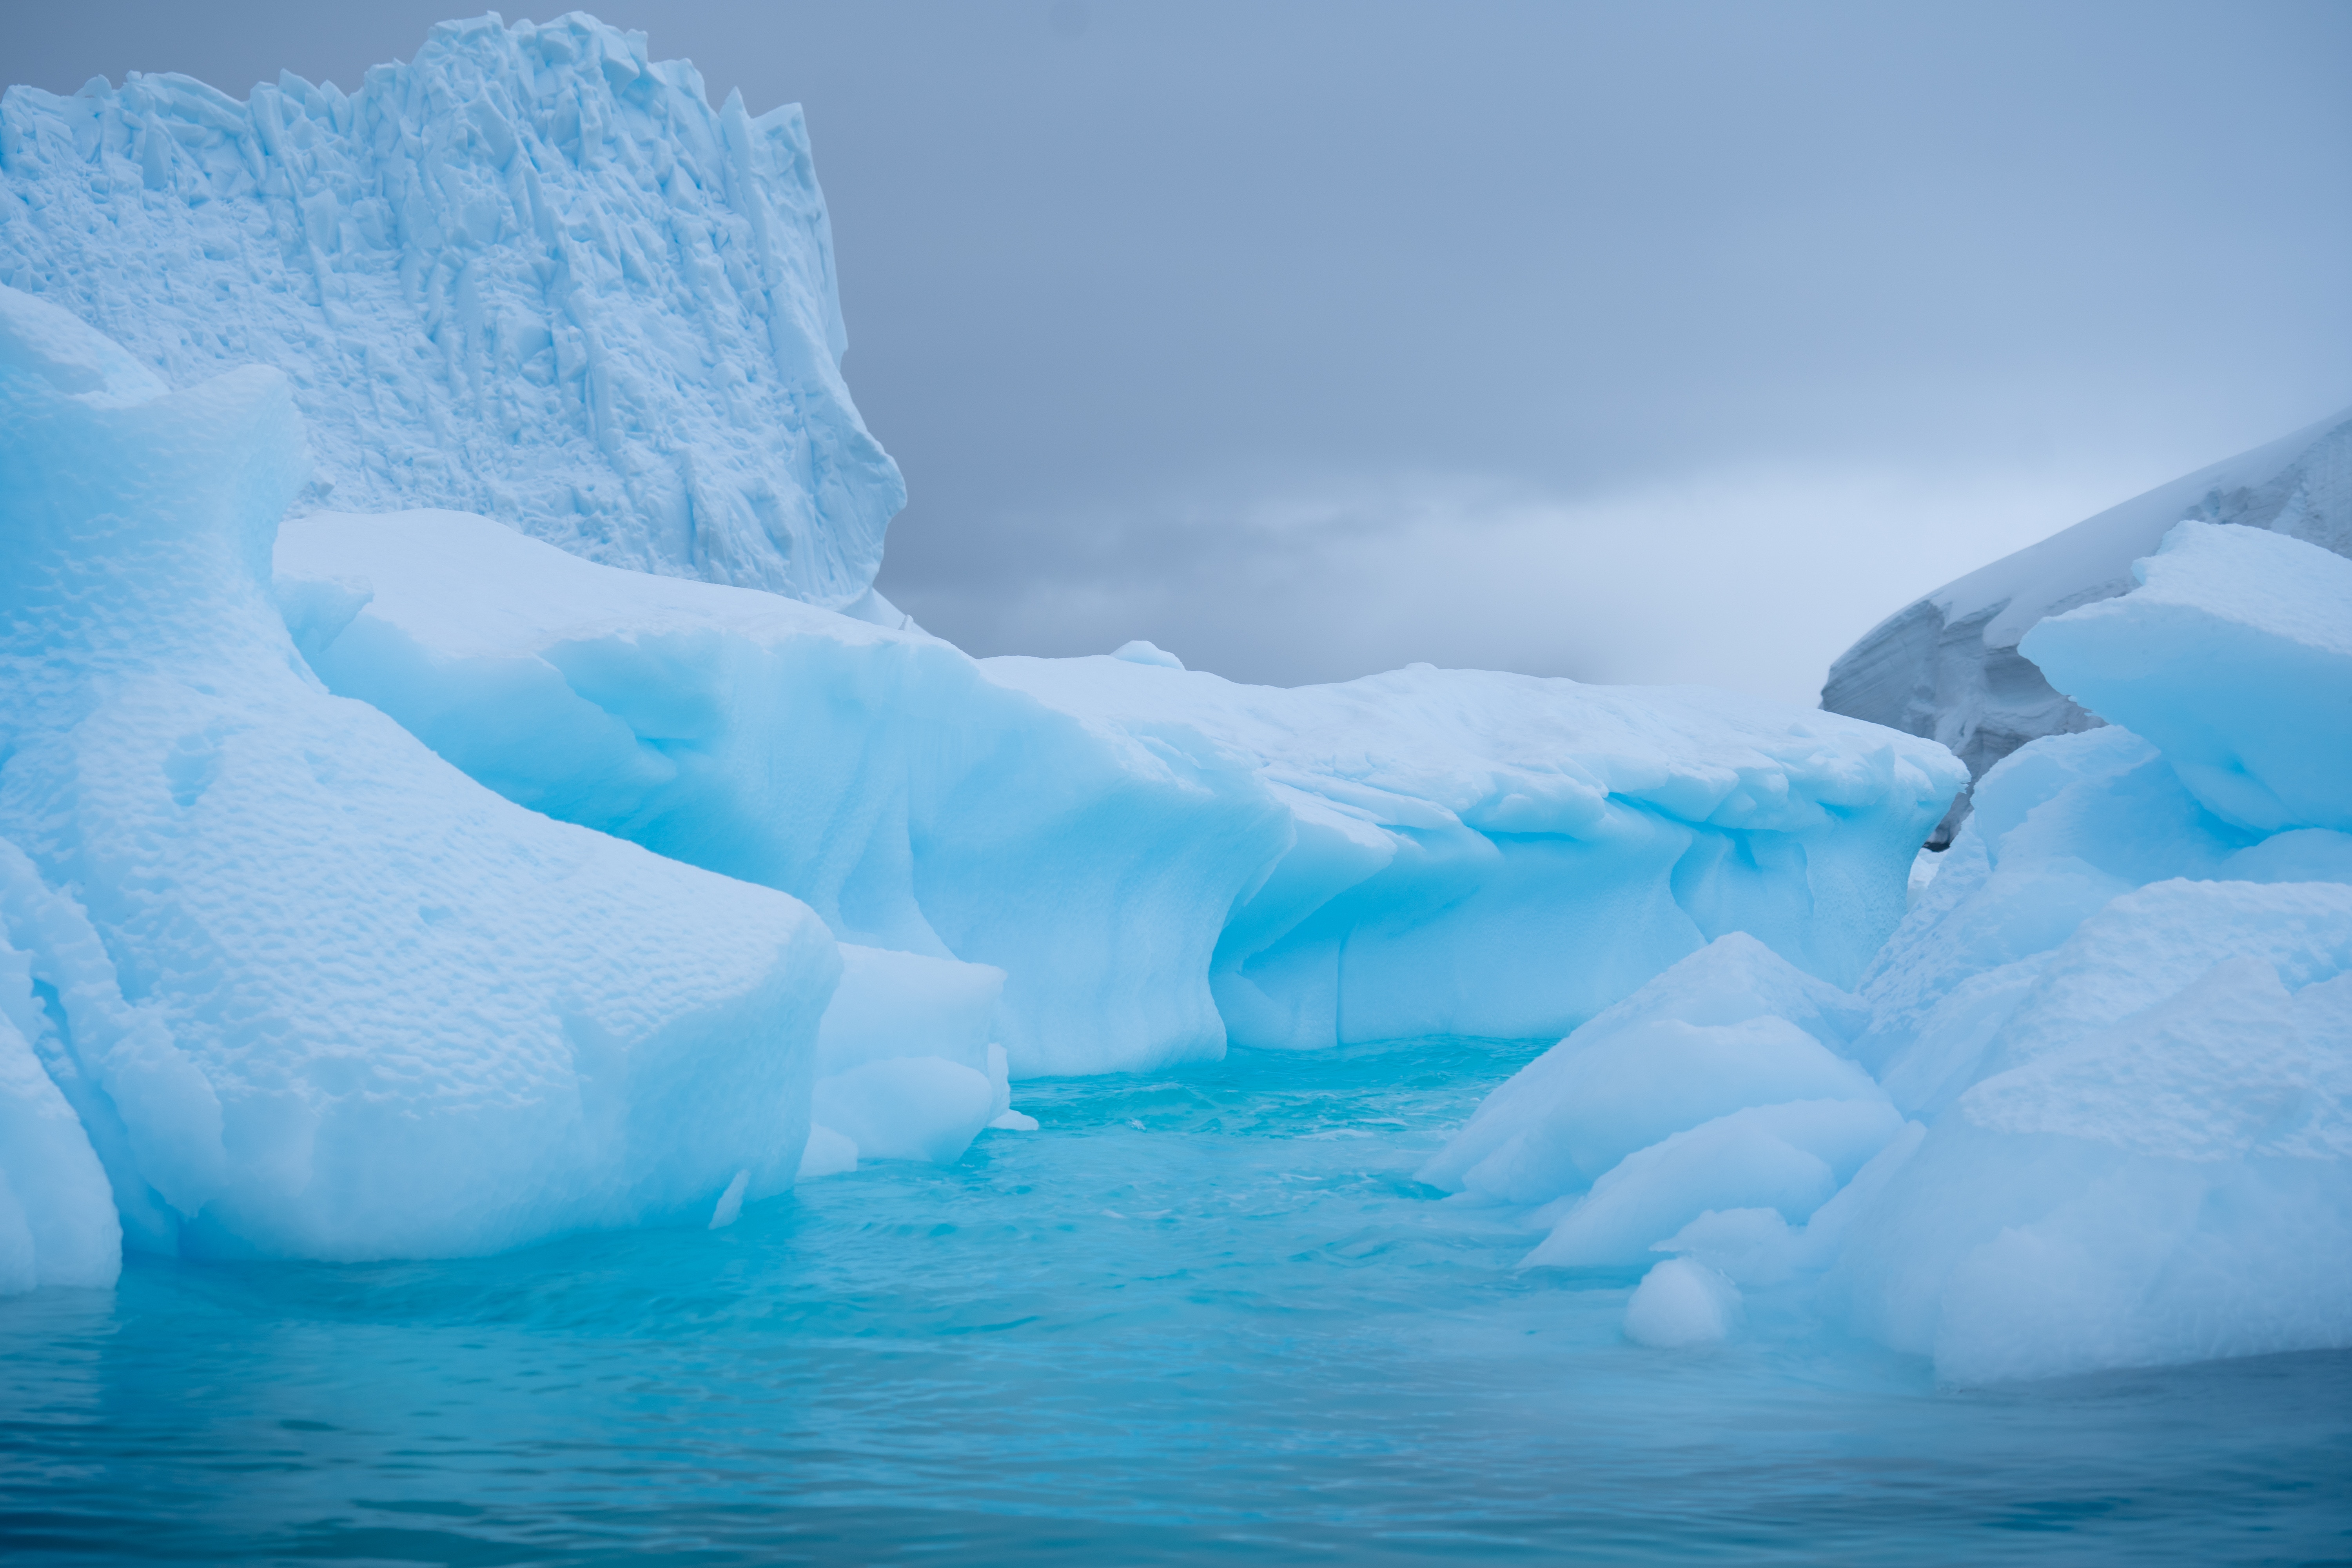 antarctica, glacier, water, nature, ice, snow, antarctic High Definition image